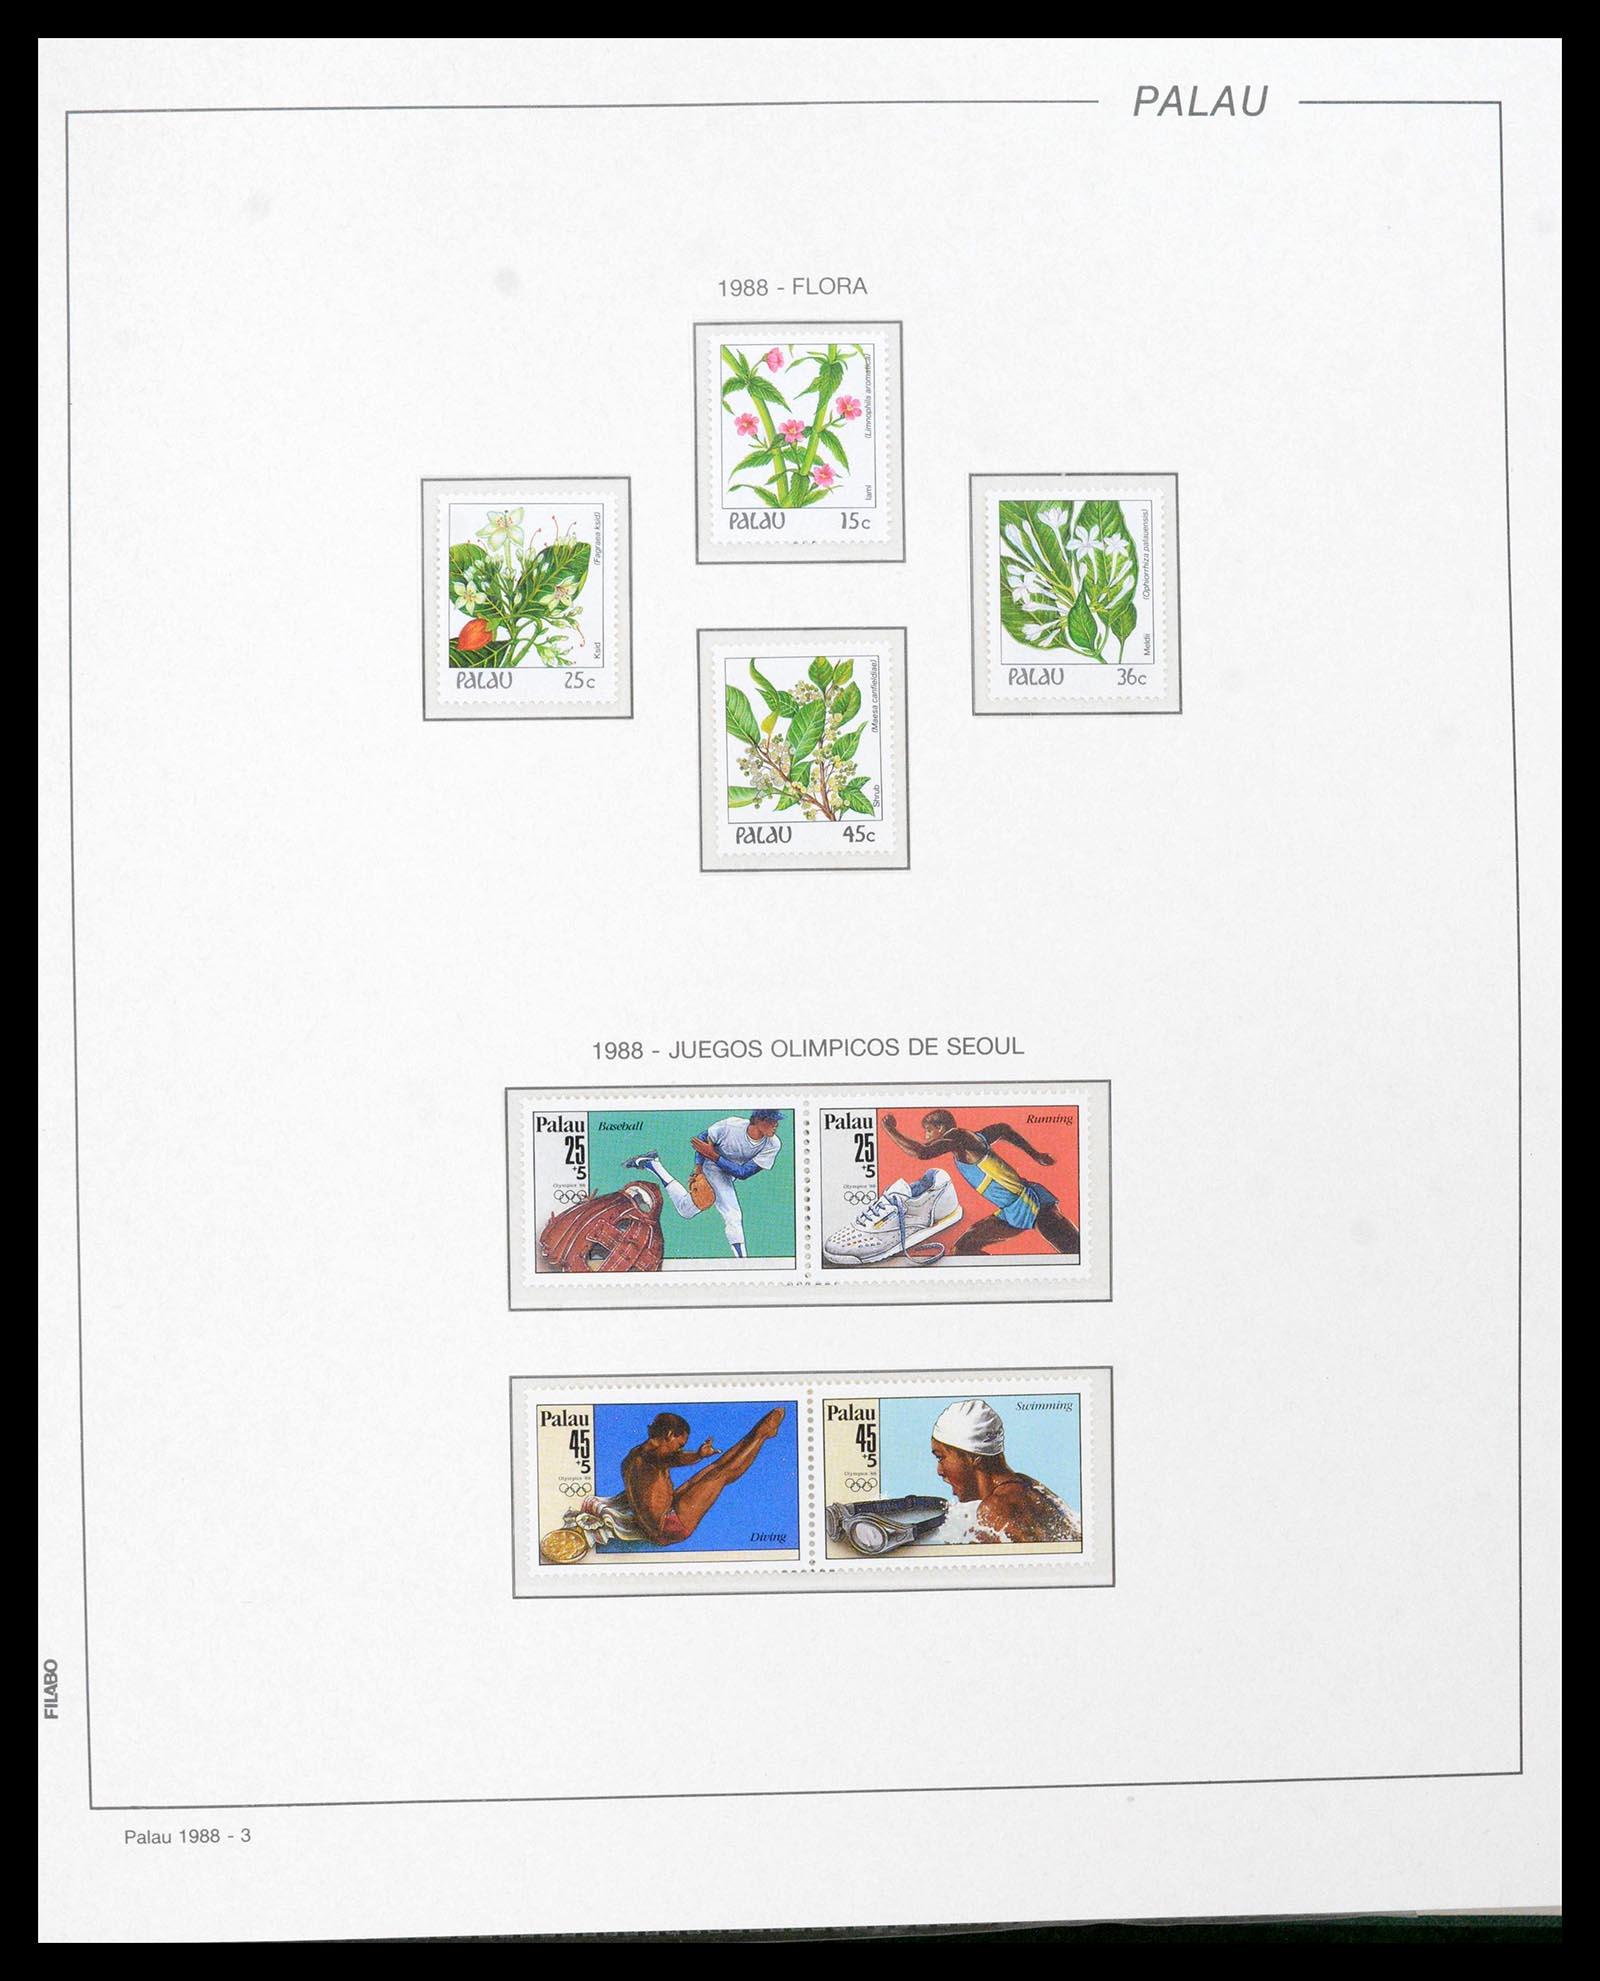 39222 0023 - Stamp collection 39222 Palau, Micronesia and Marshall islands 1980-1995.